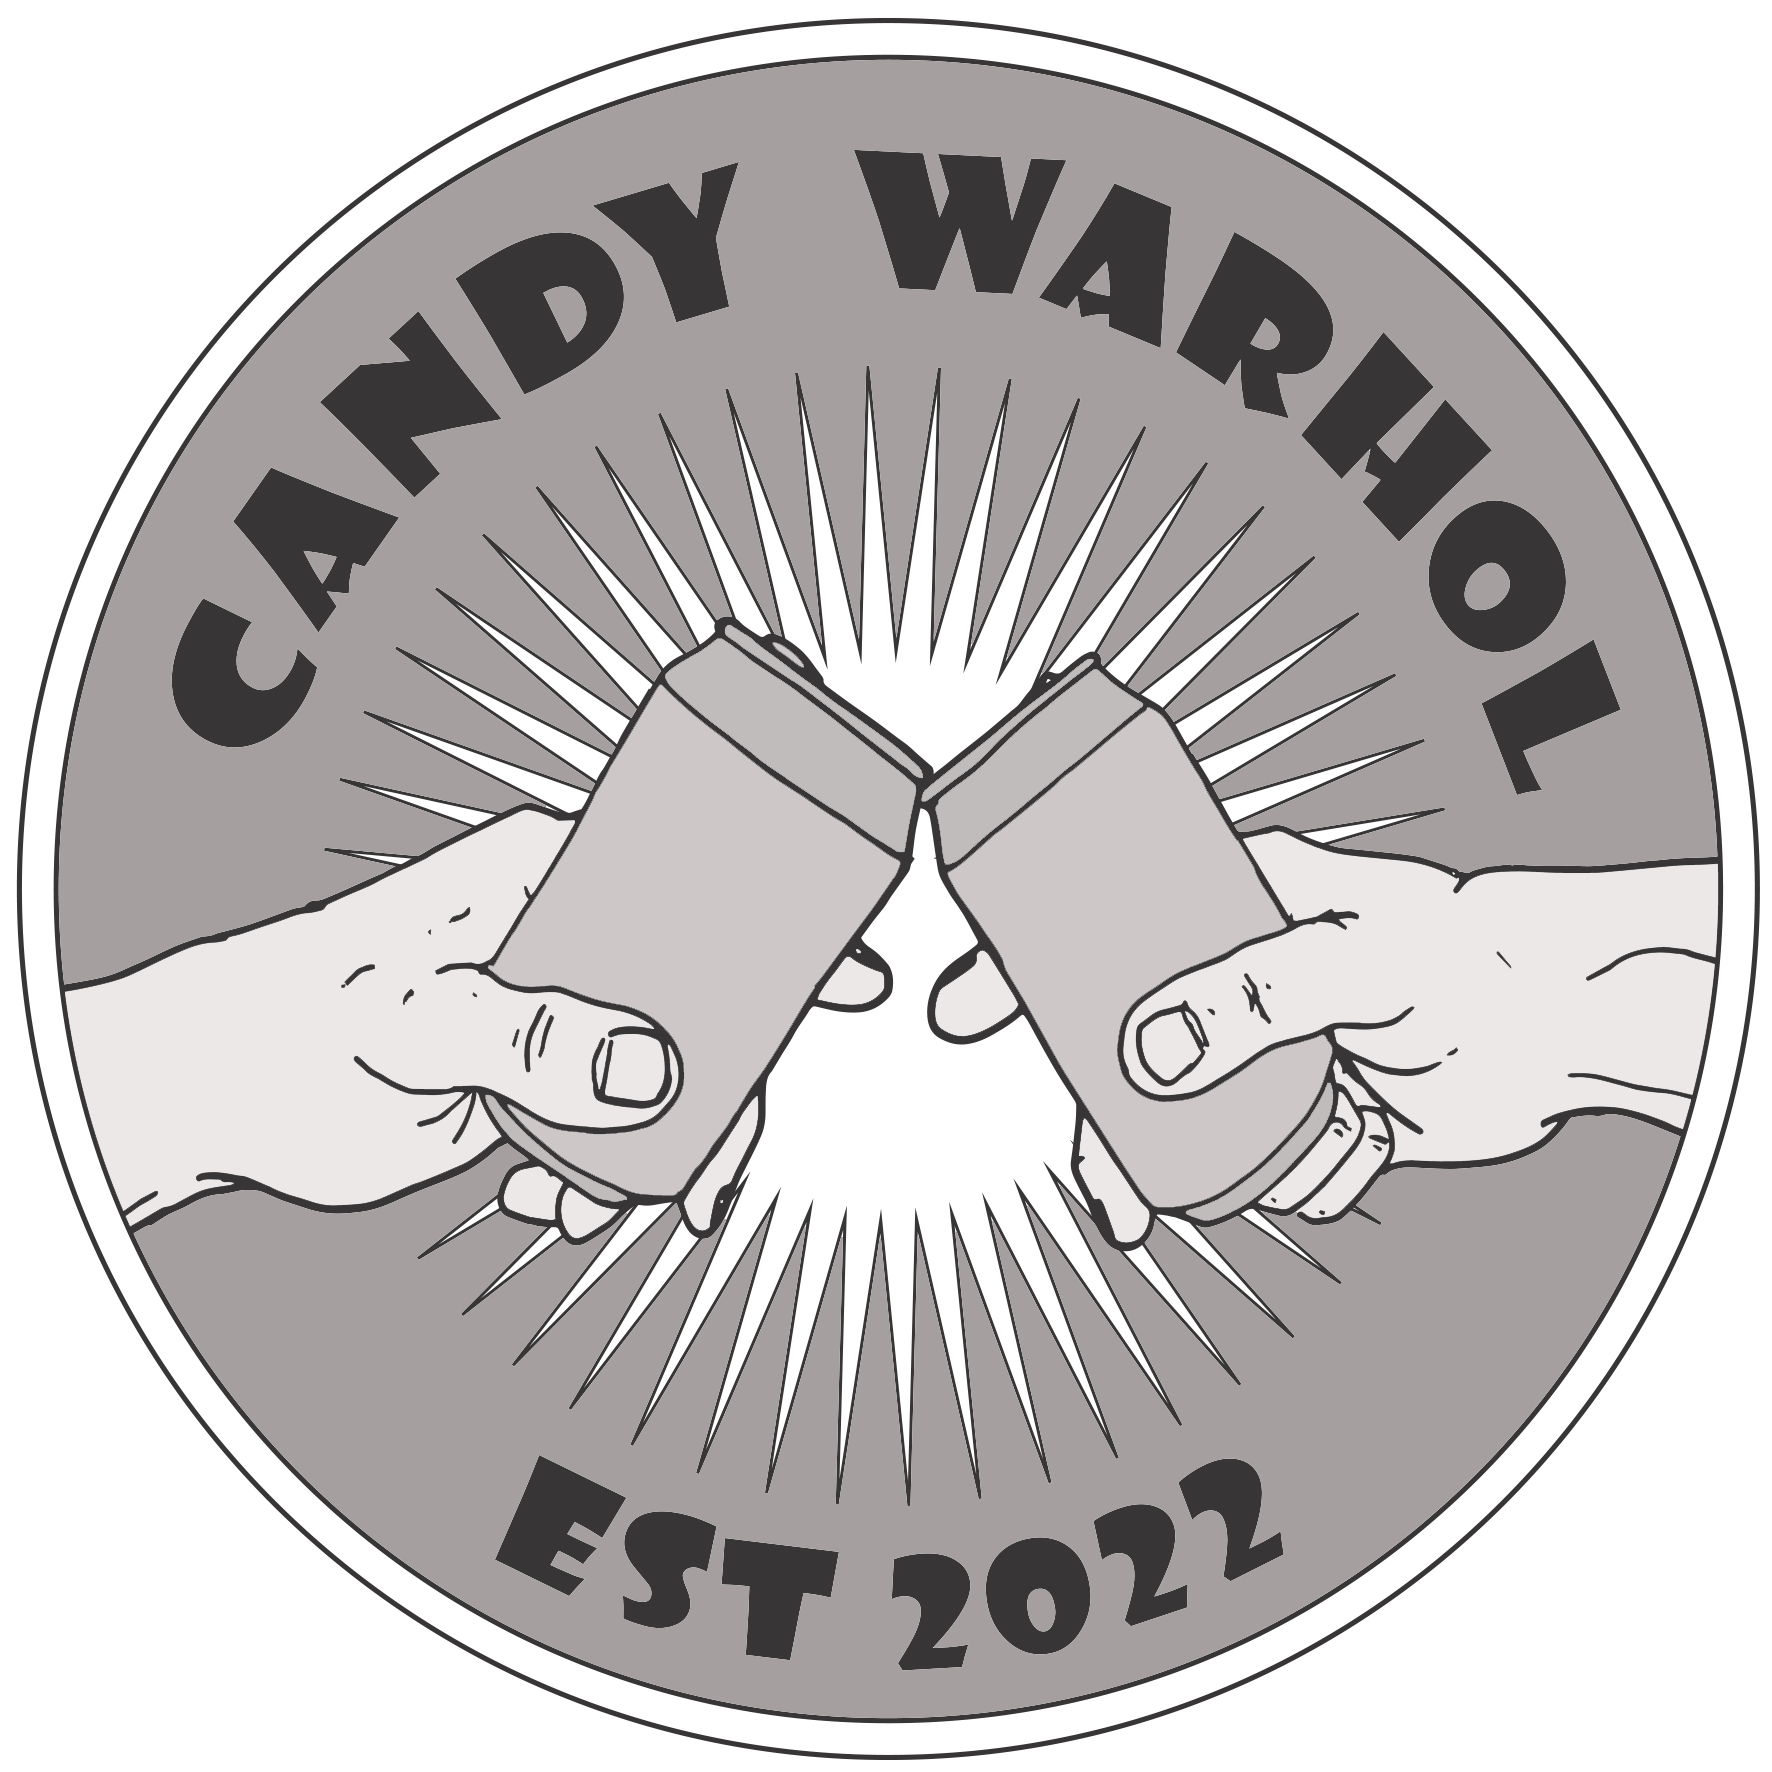 Candy Warhol